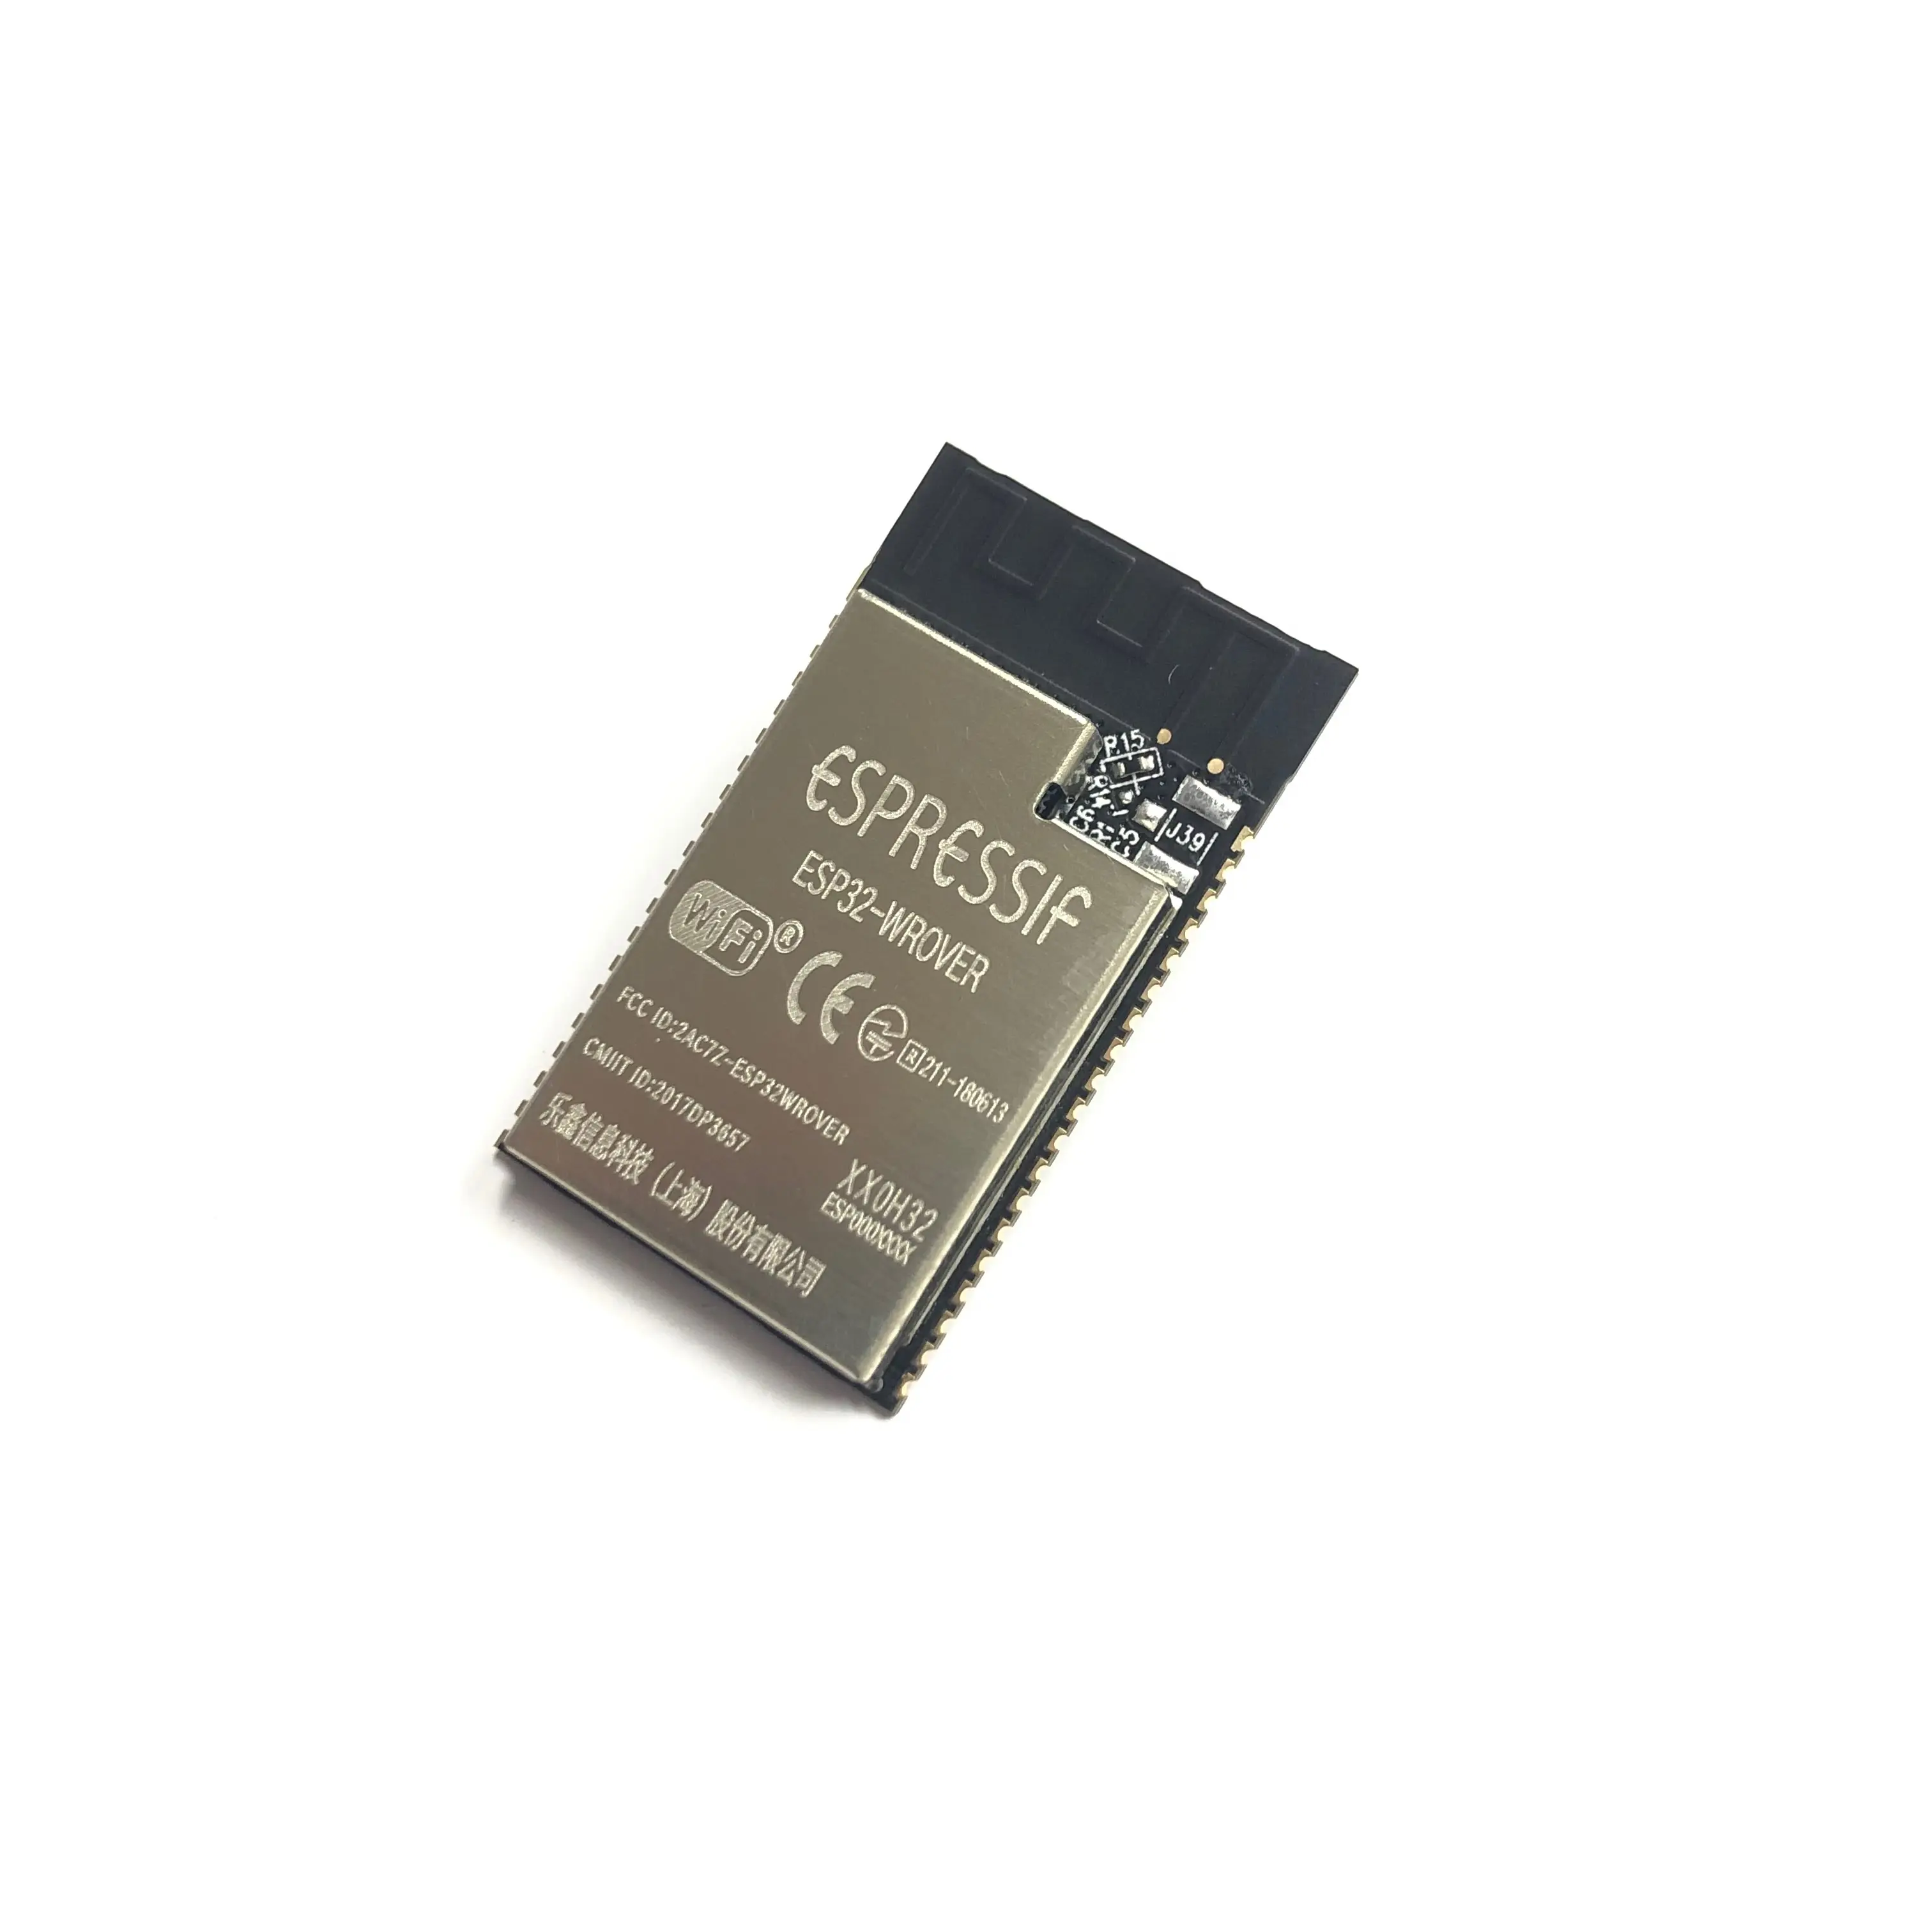 Neue 4 MB Flash+2 MB Integrated Circuits Elektronikkomponenten BOM Dienst Original ESP32-S2-MINI-2U-N4R2 2,4 GHz WLAN-Modul